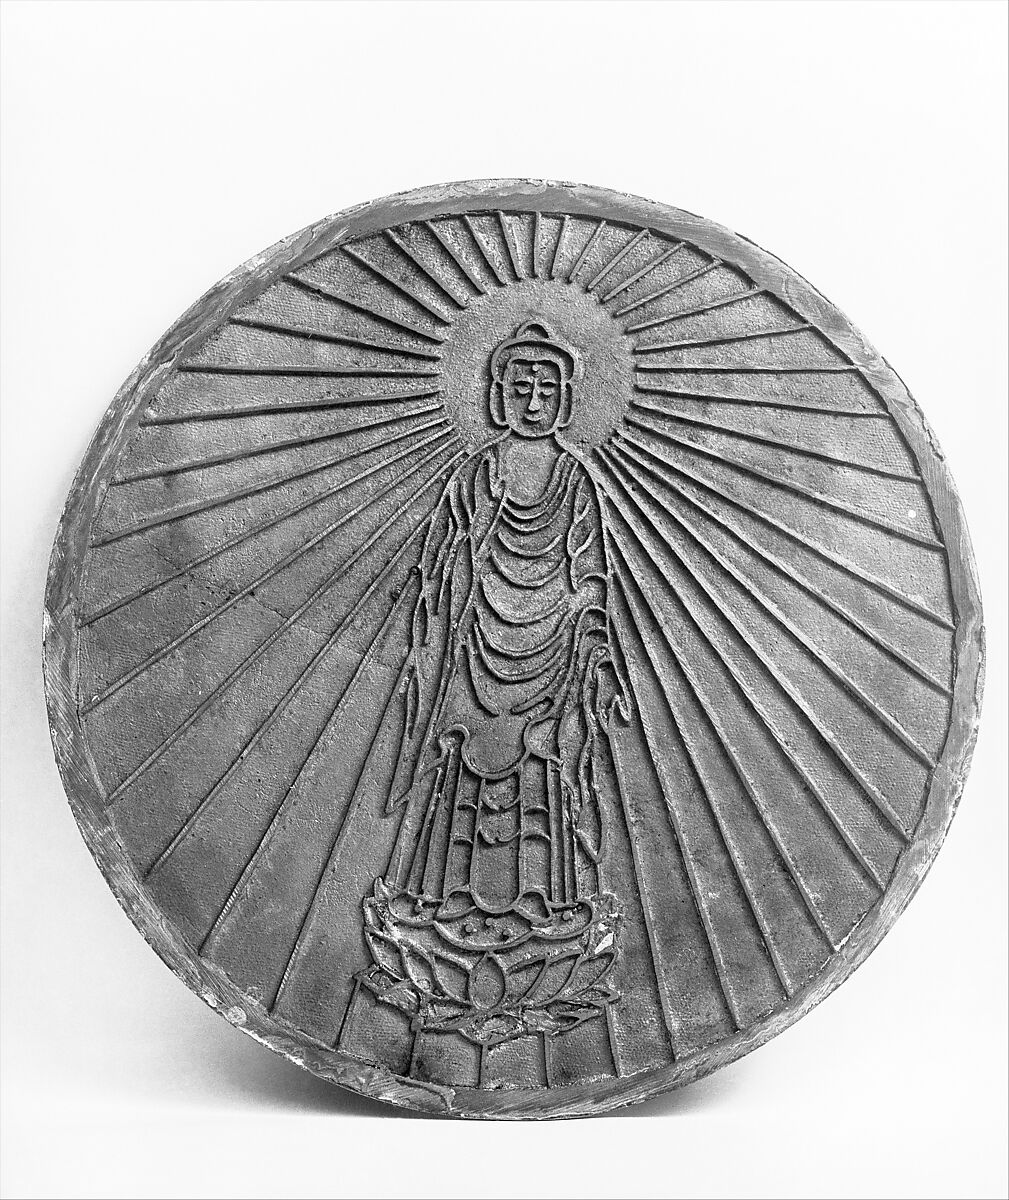 Magic Mirror with Image of the Buddha Amida, Bronze, Japan 